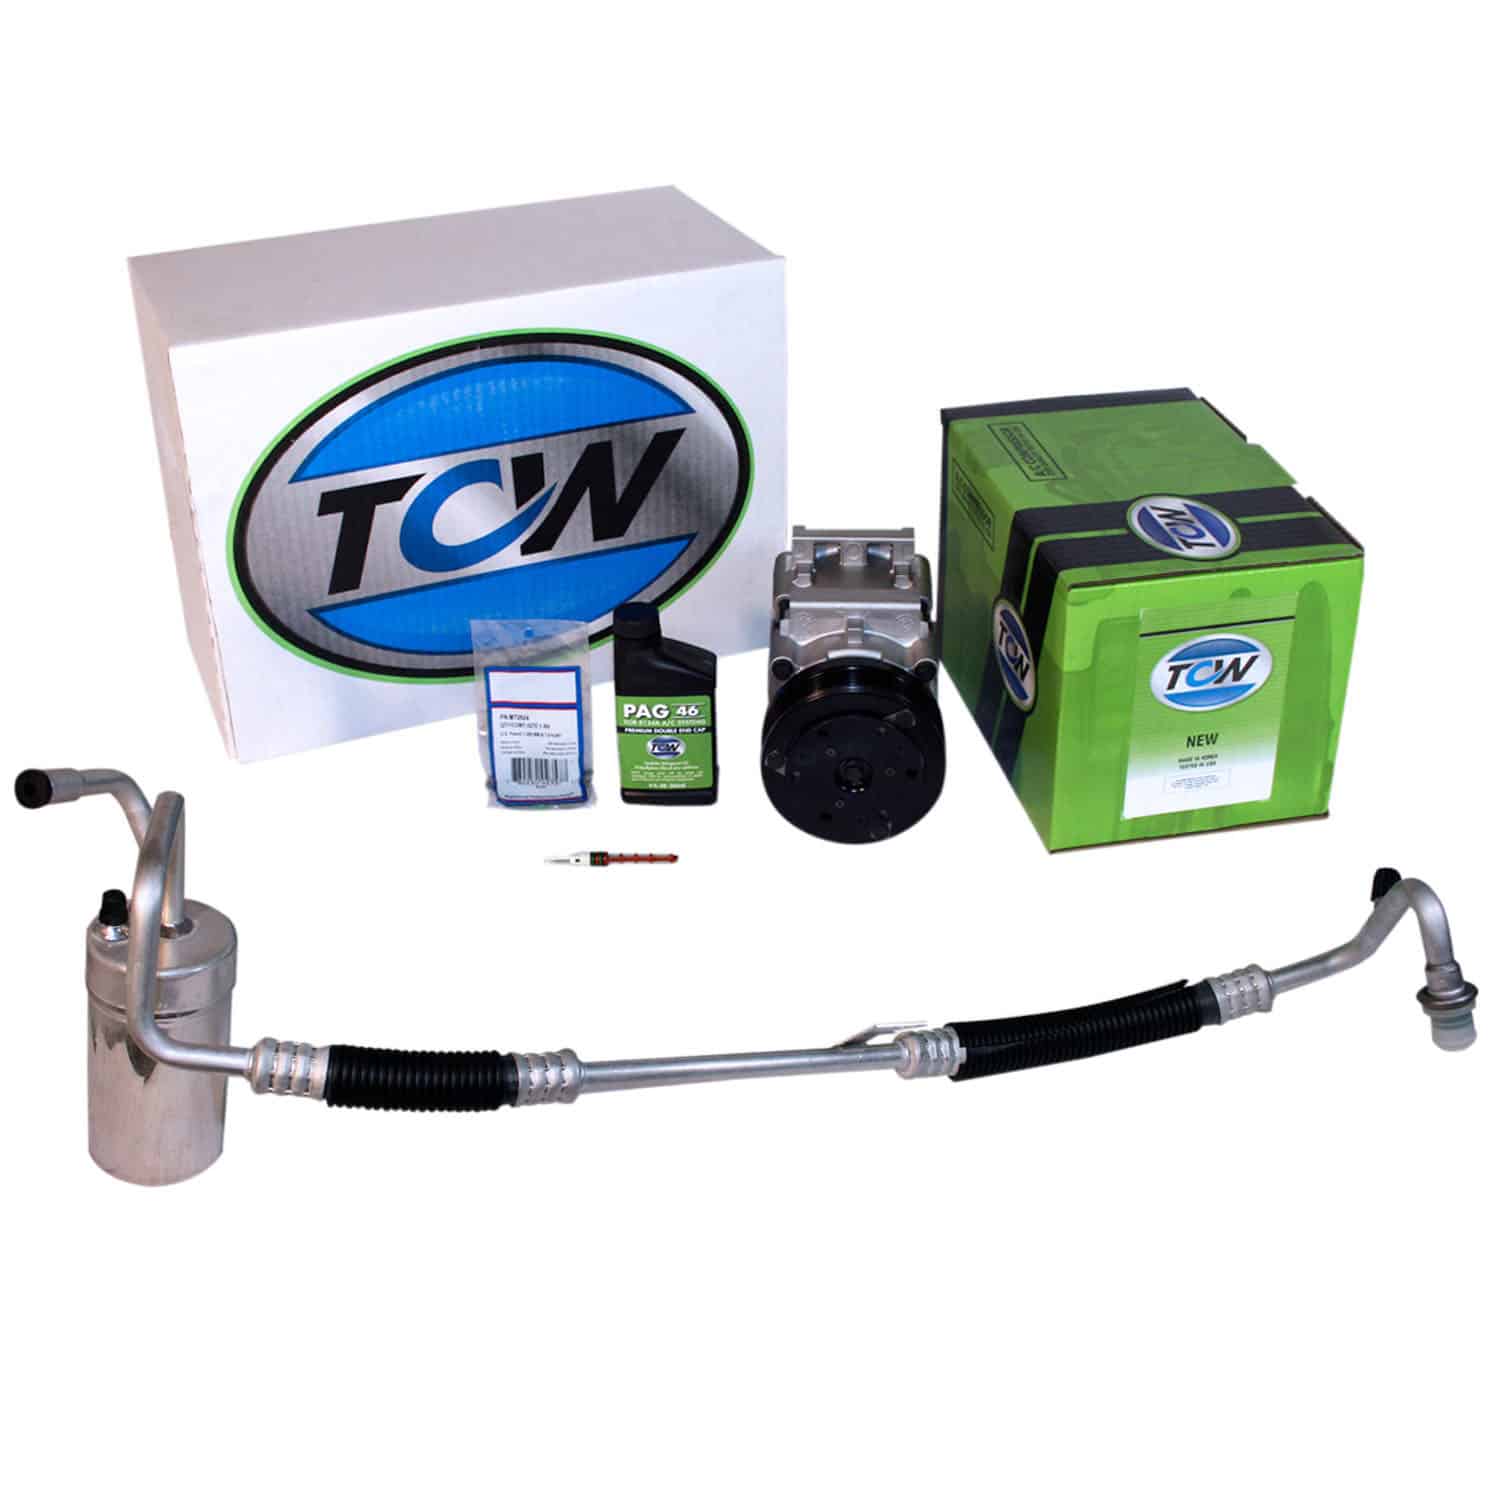 TCW Vehicle A/C Kit K1000284N New Product Image field_60b6a13a6e67c